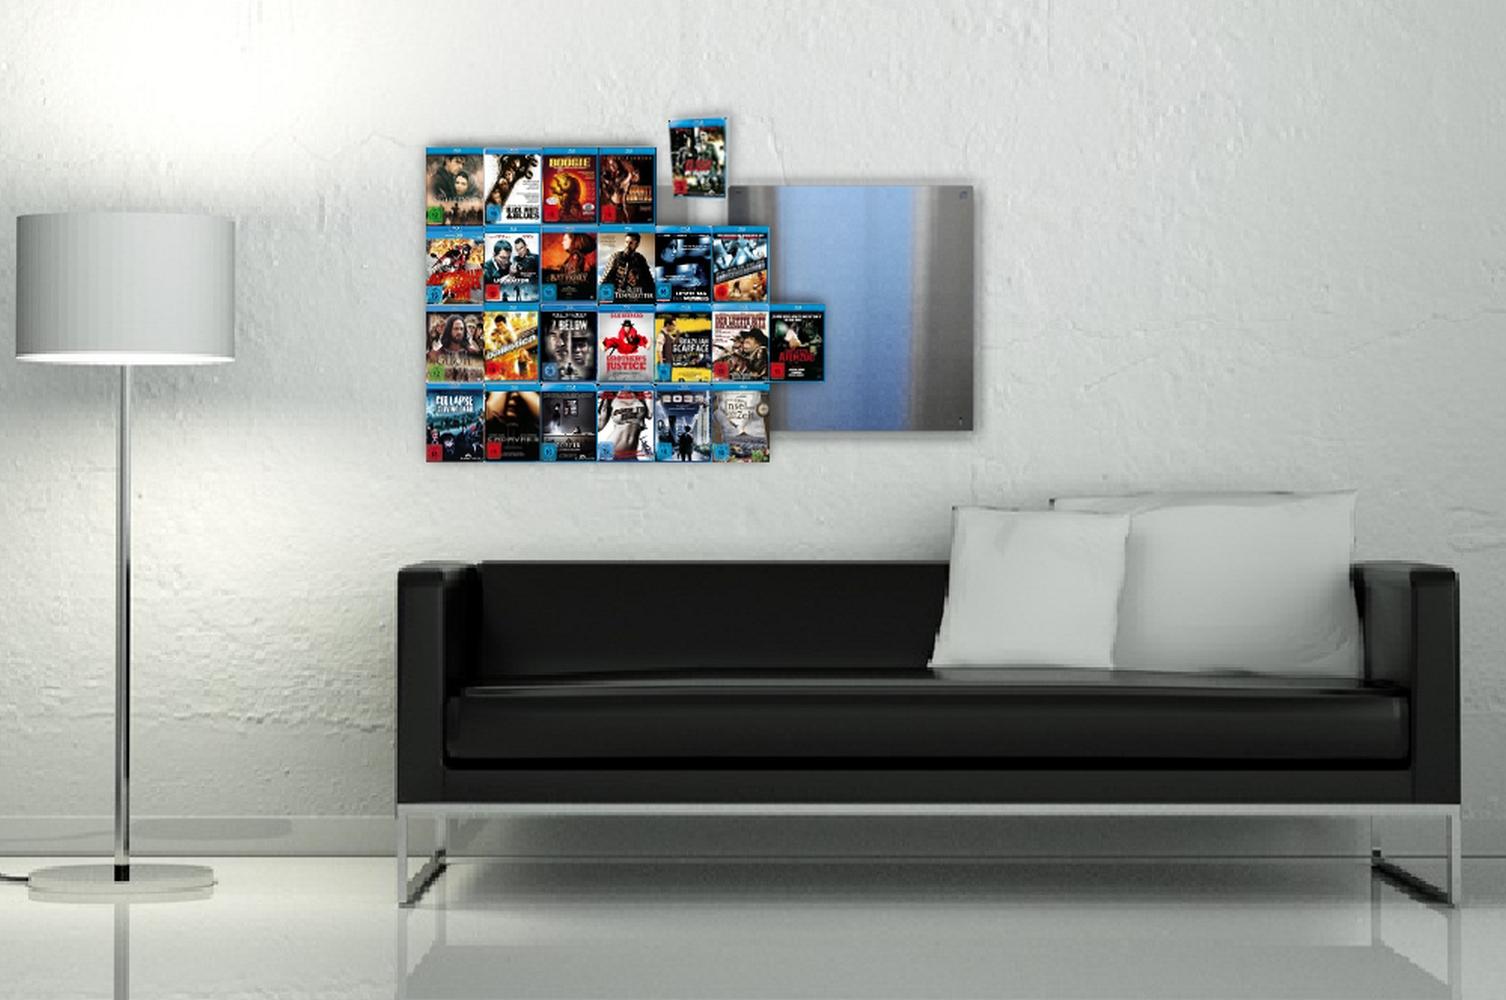 Deine Blu-Ray Cover als Wandbild #wandregal #cdregal #blu-ray ©CD-Wall #deko #regalwand #regal #regale #wandregal